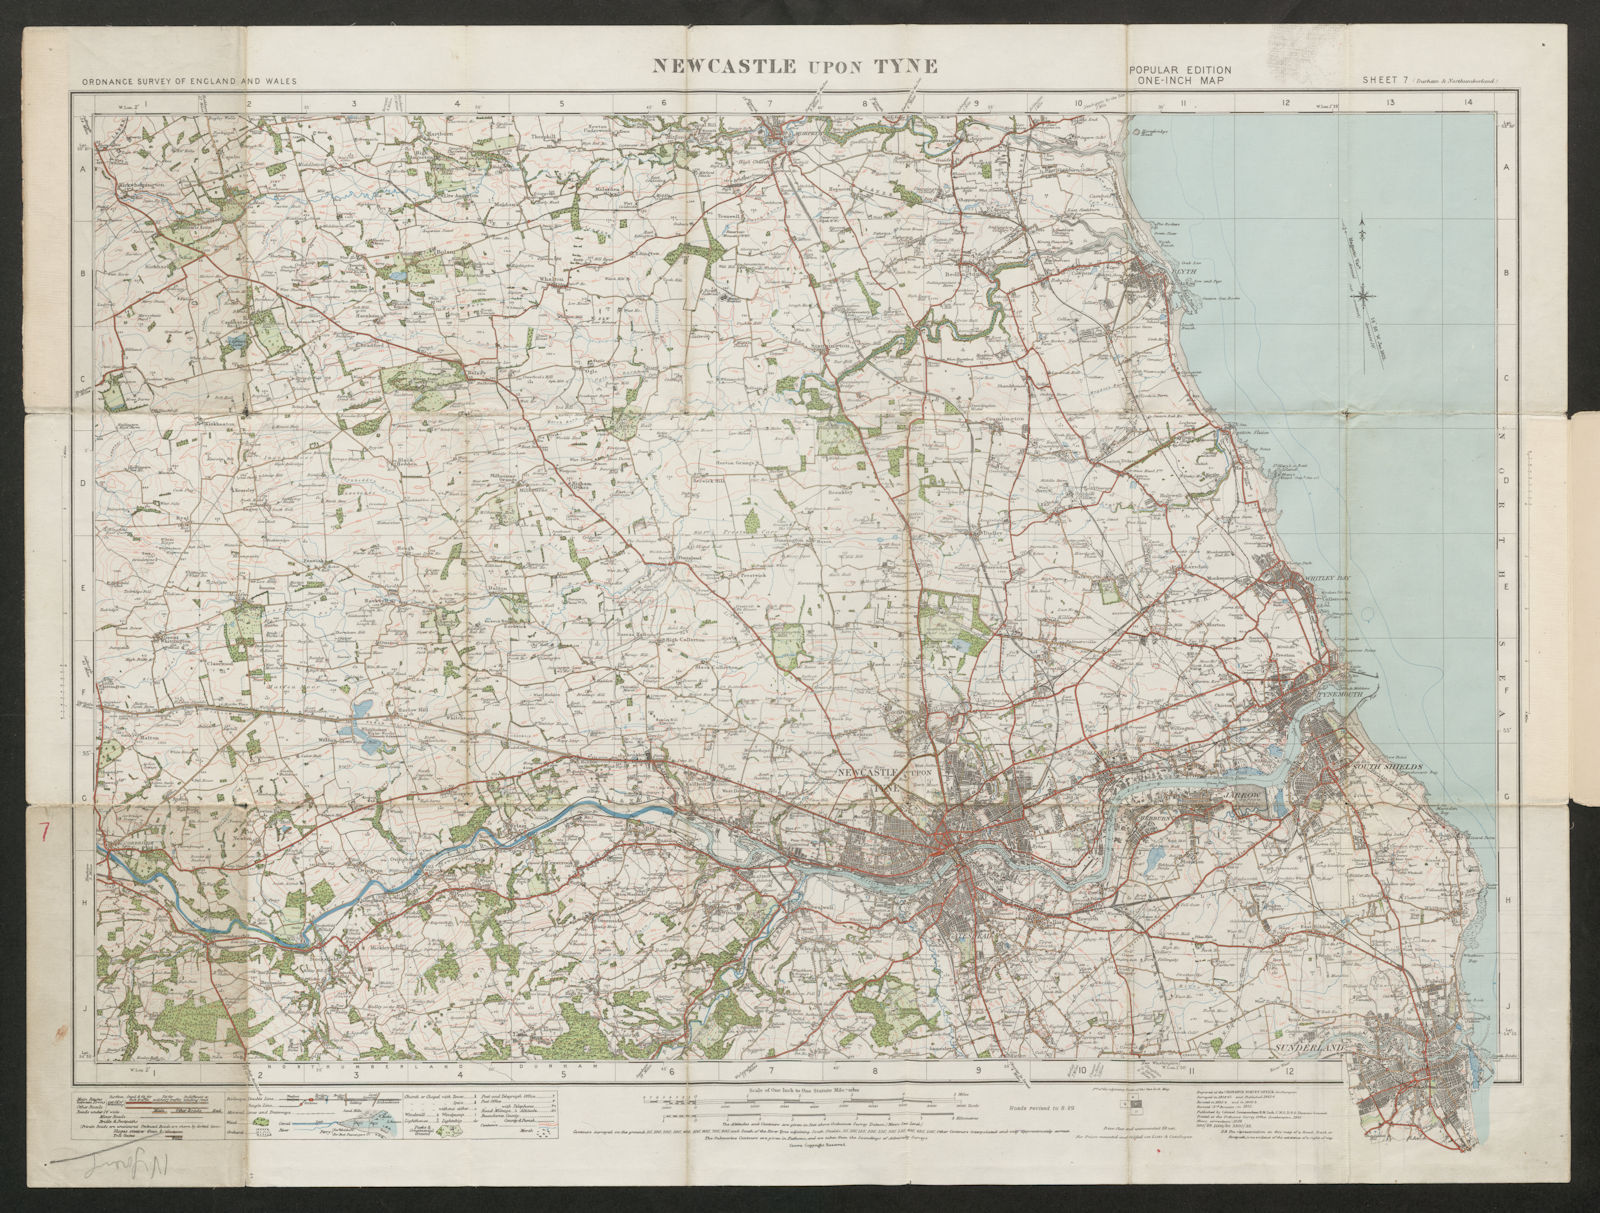 NEWCASTLE UPON TYNE sheet 7. Tyneside Sunderland. ORDNANCE SURVEY 1932 old map